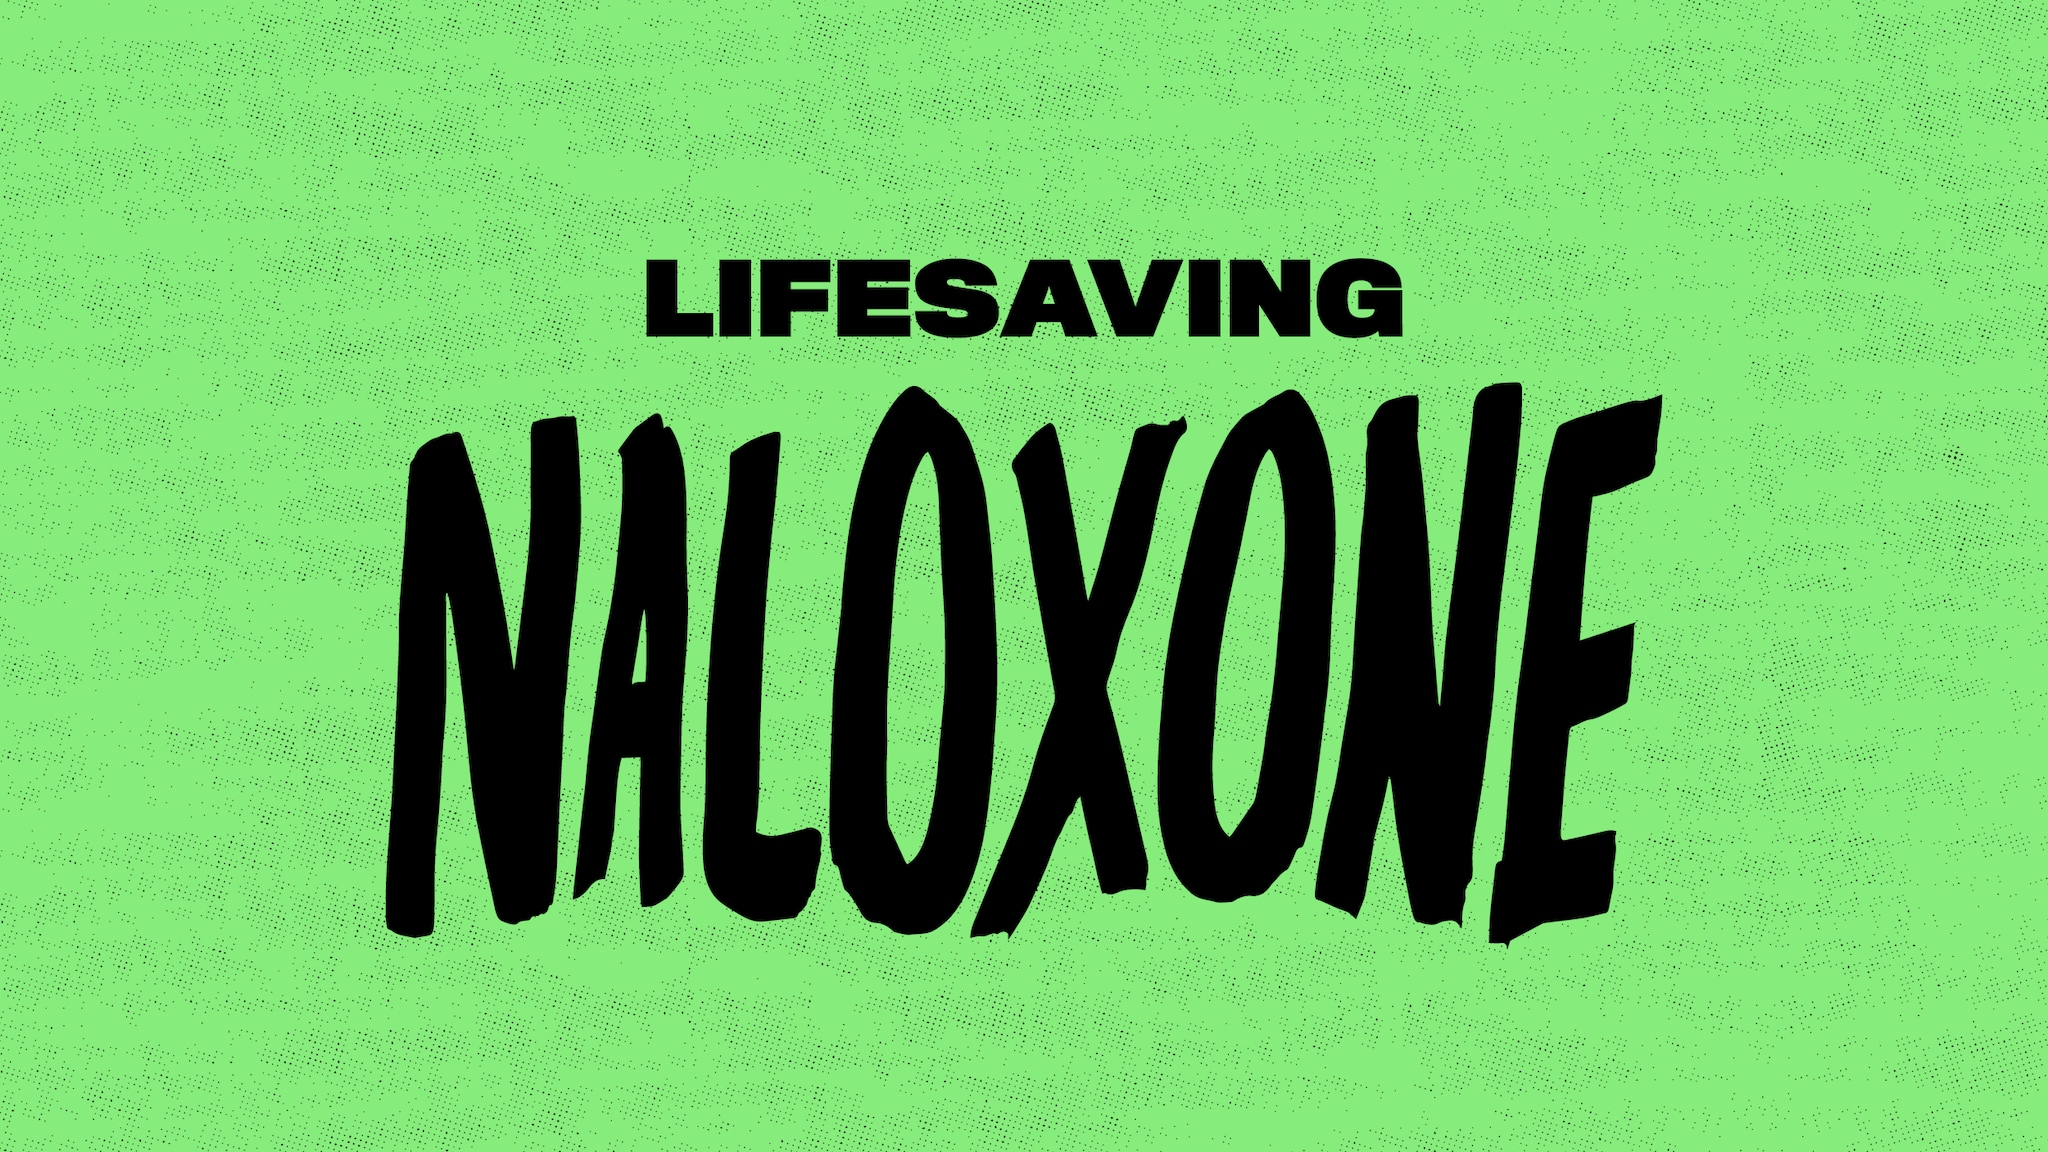 lifesaving naloxone